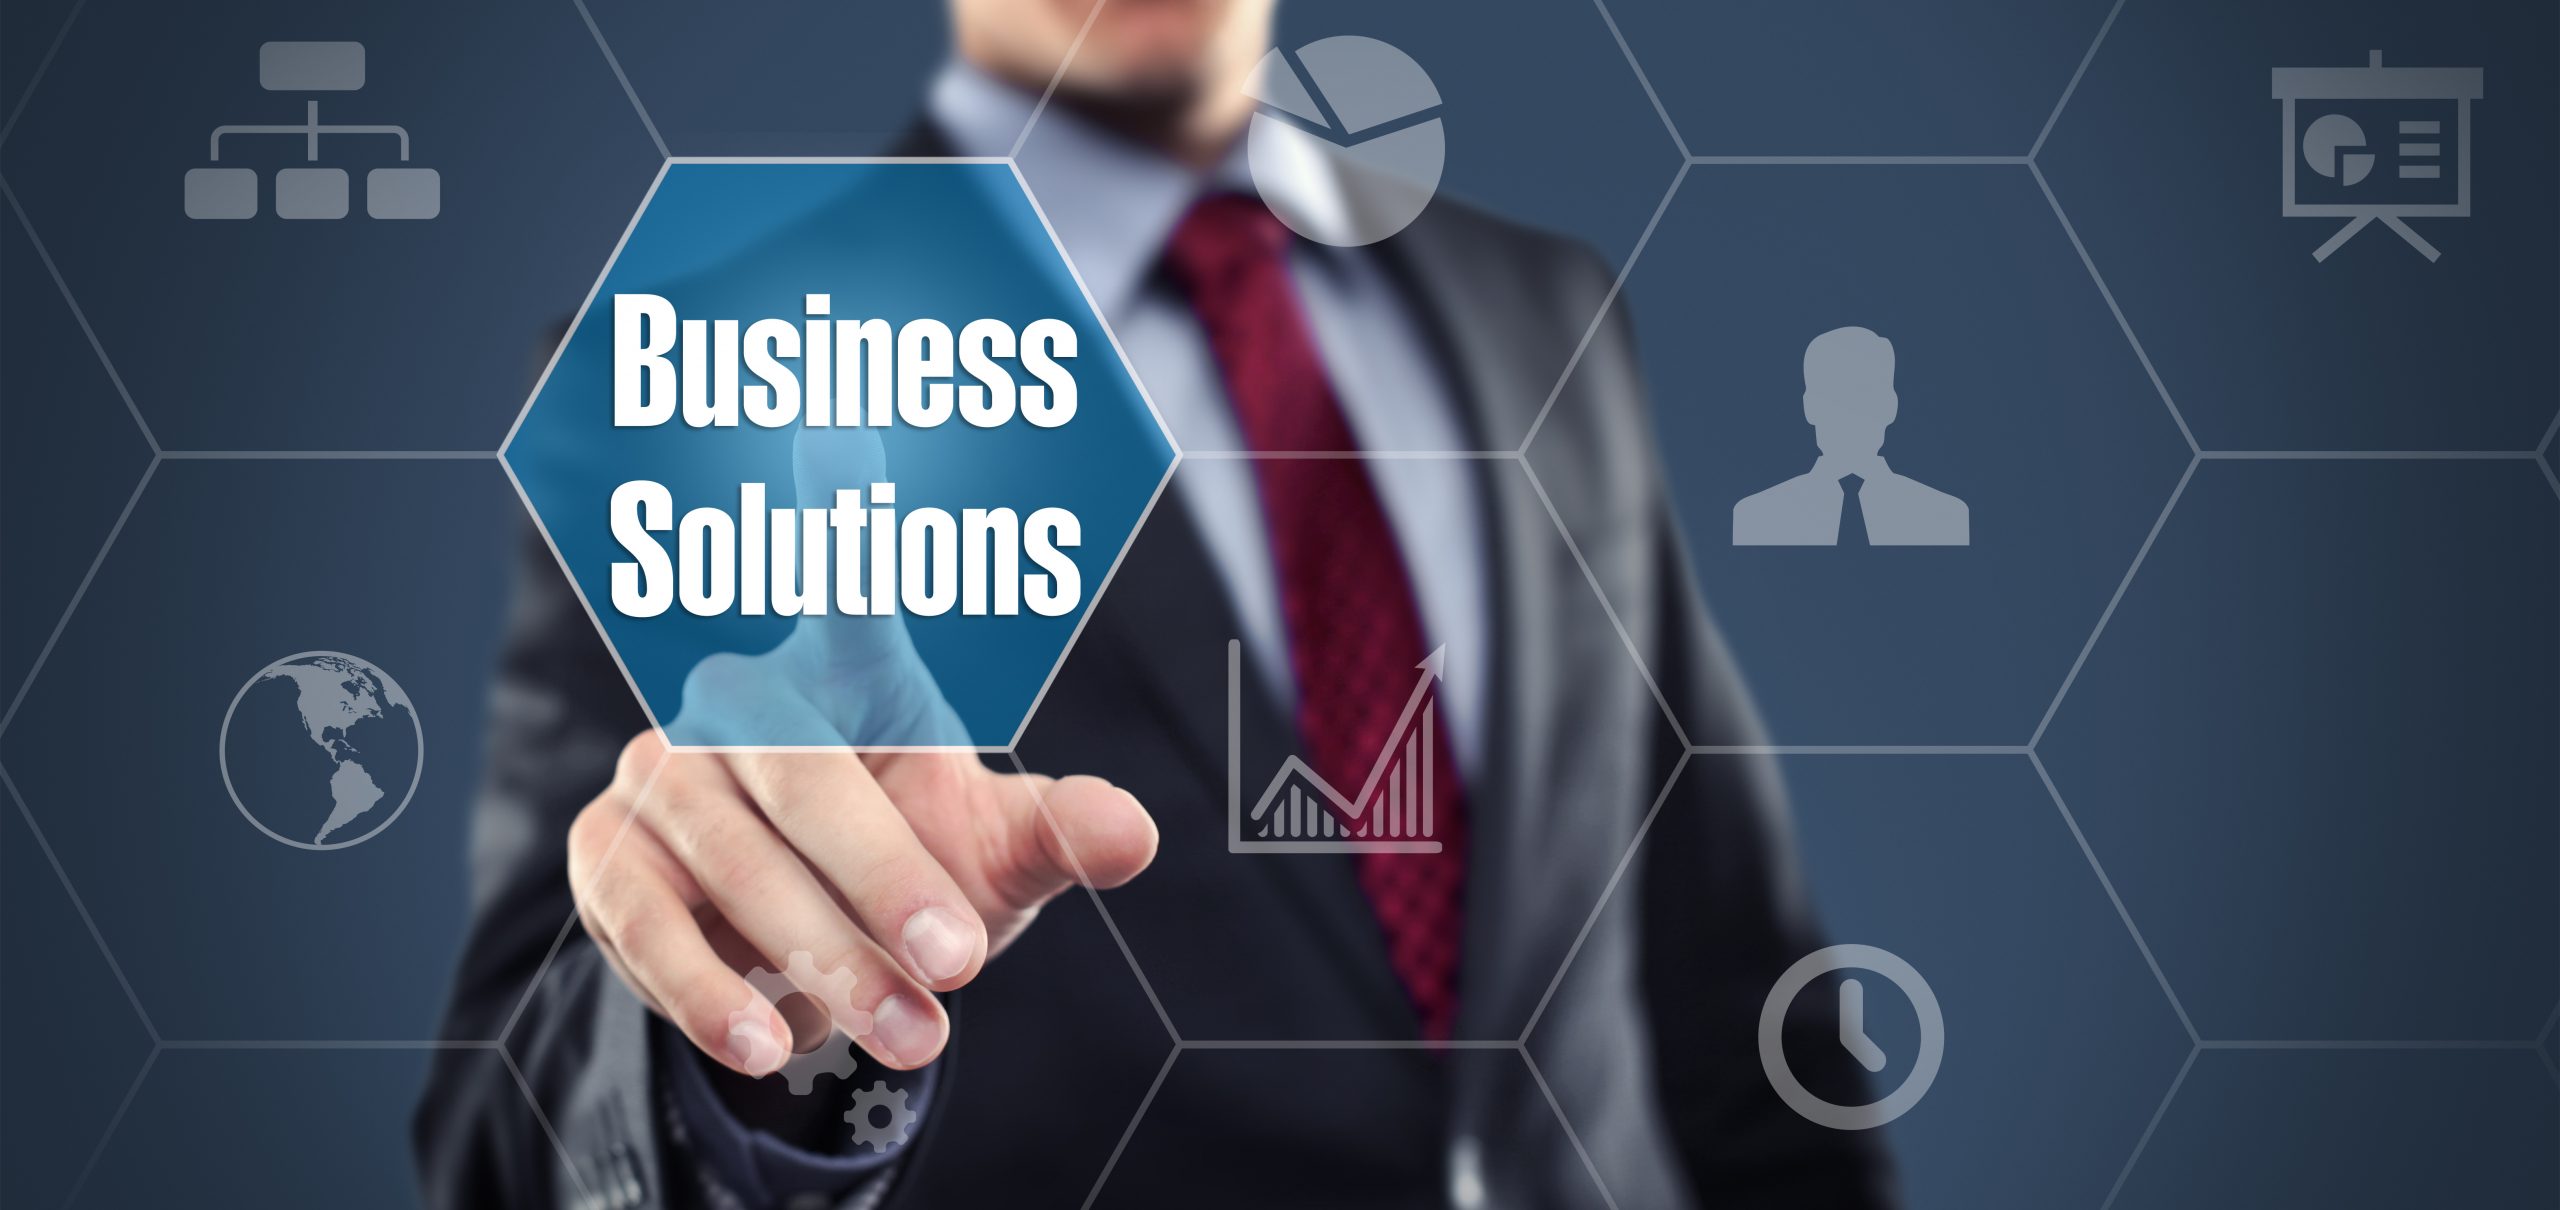 CopyTex Business Solutions